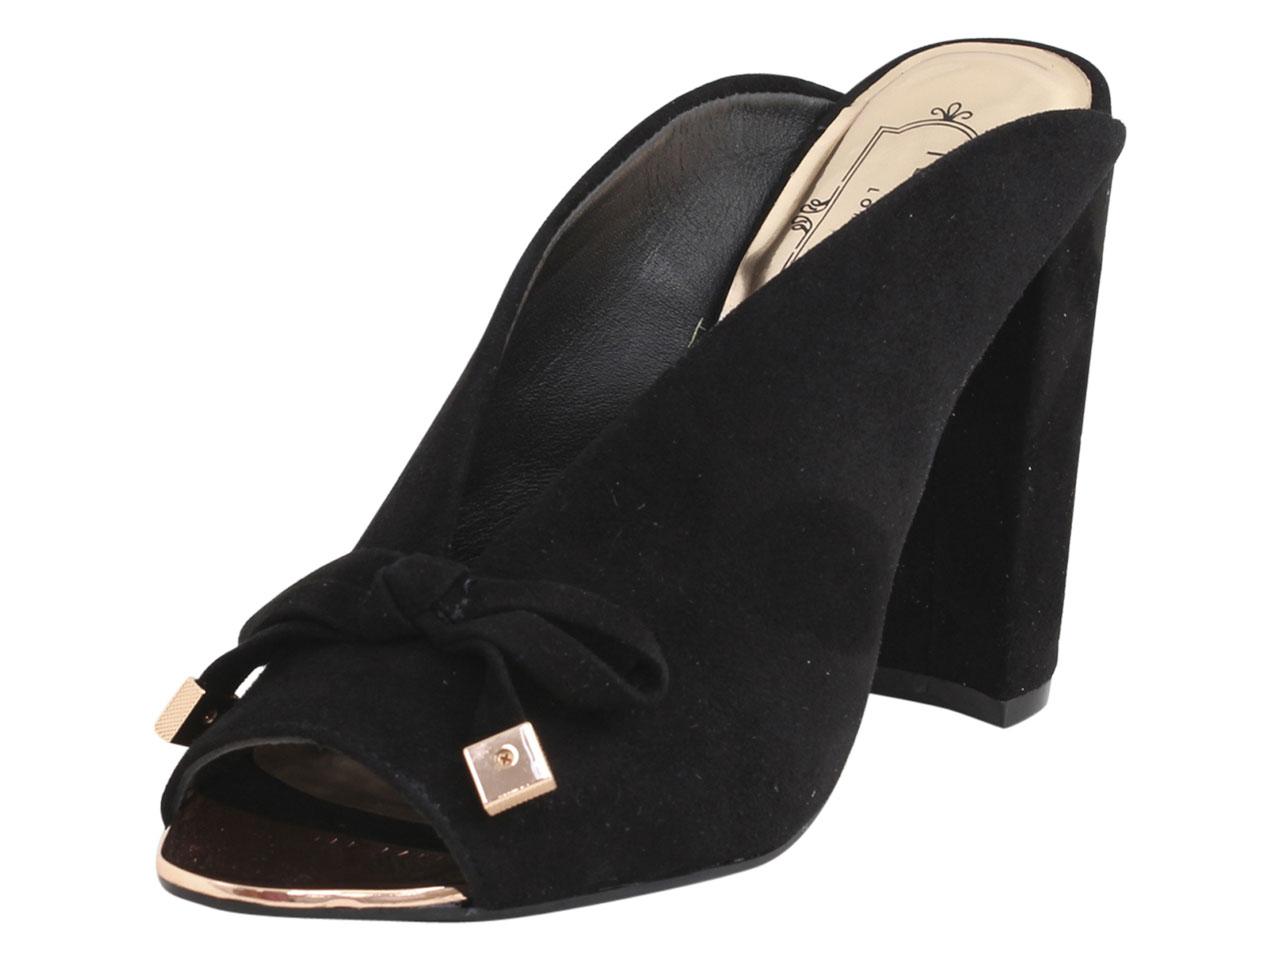 Ted Baker Women's Marinax Pumps Heels Shoes - Black - 7 B(M) US